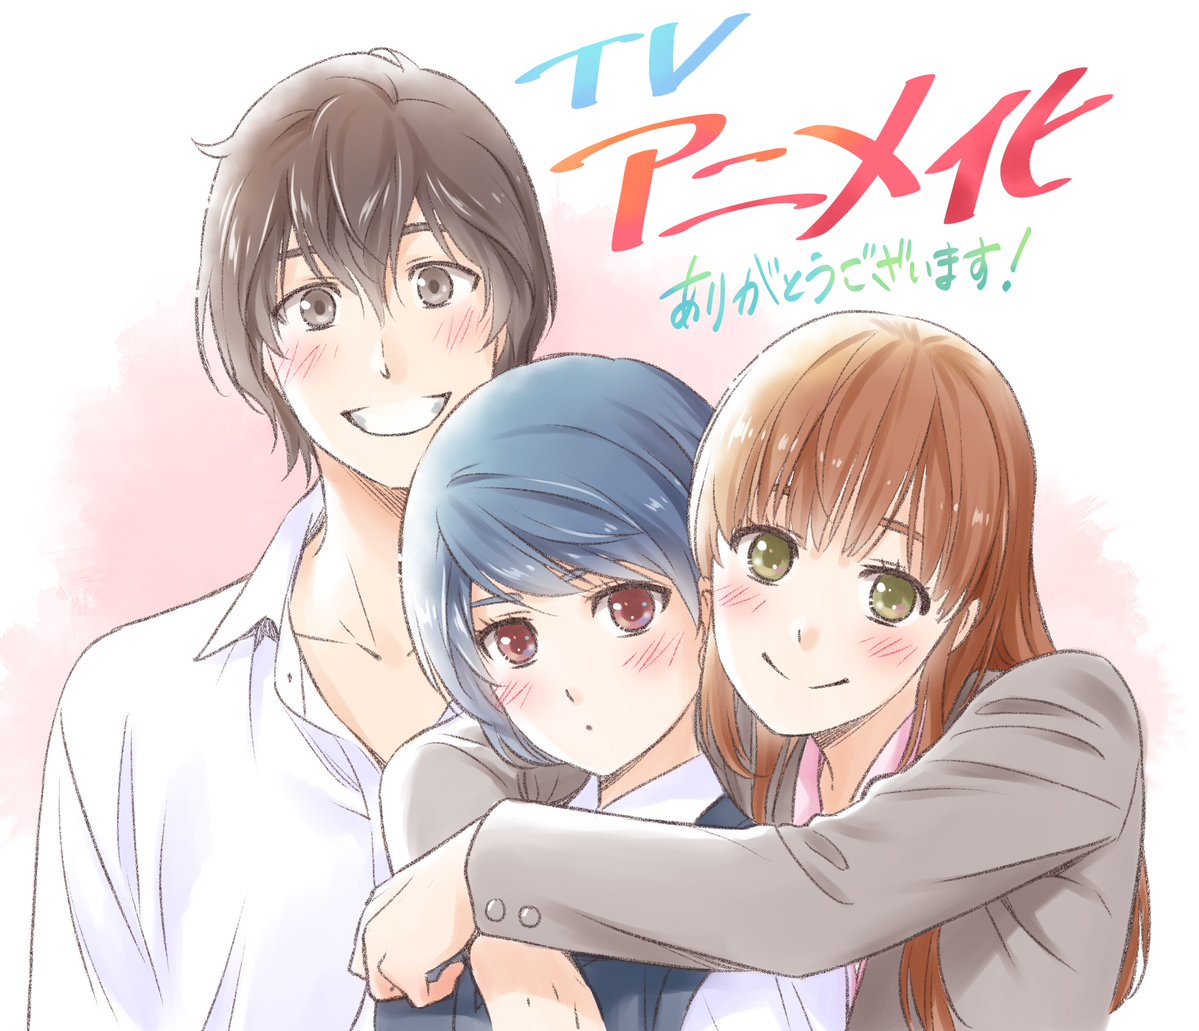 “Step-Sibling Romance ‘Domestic Girlfriend’ Gets an Anime https://t.co/aBhA...